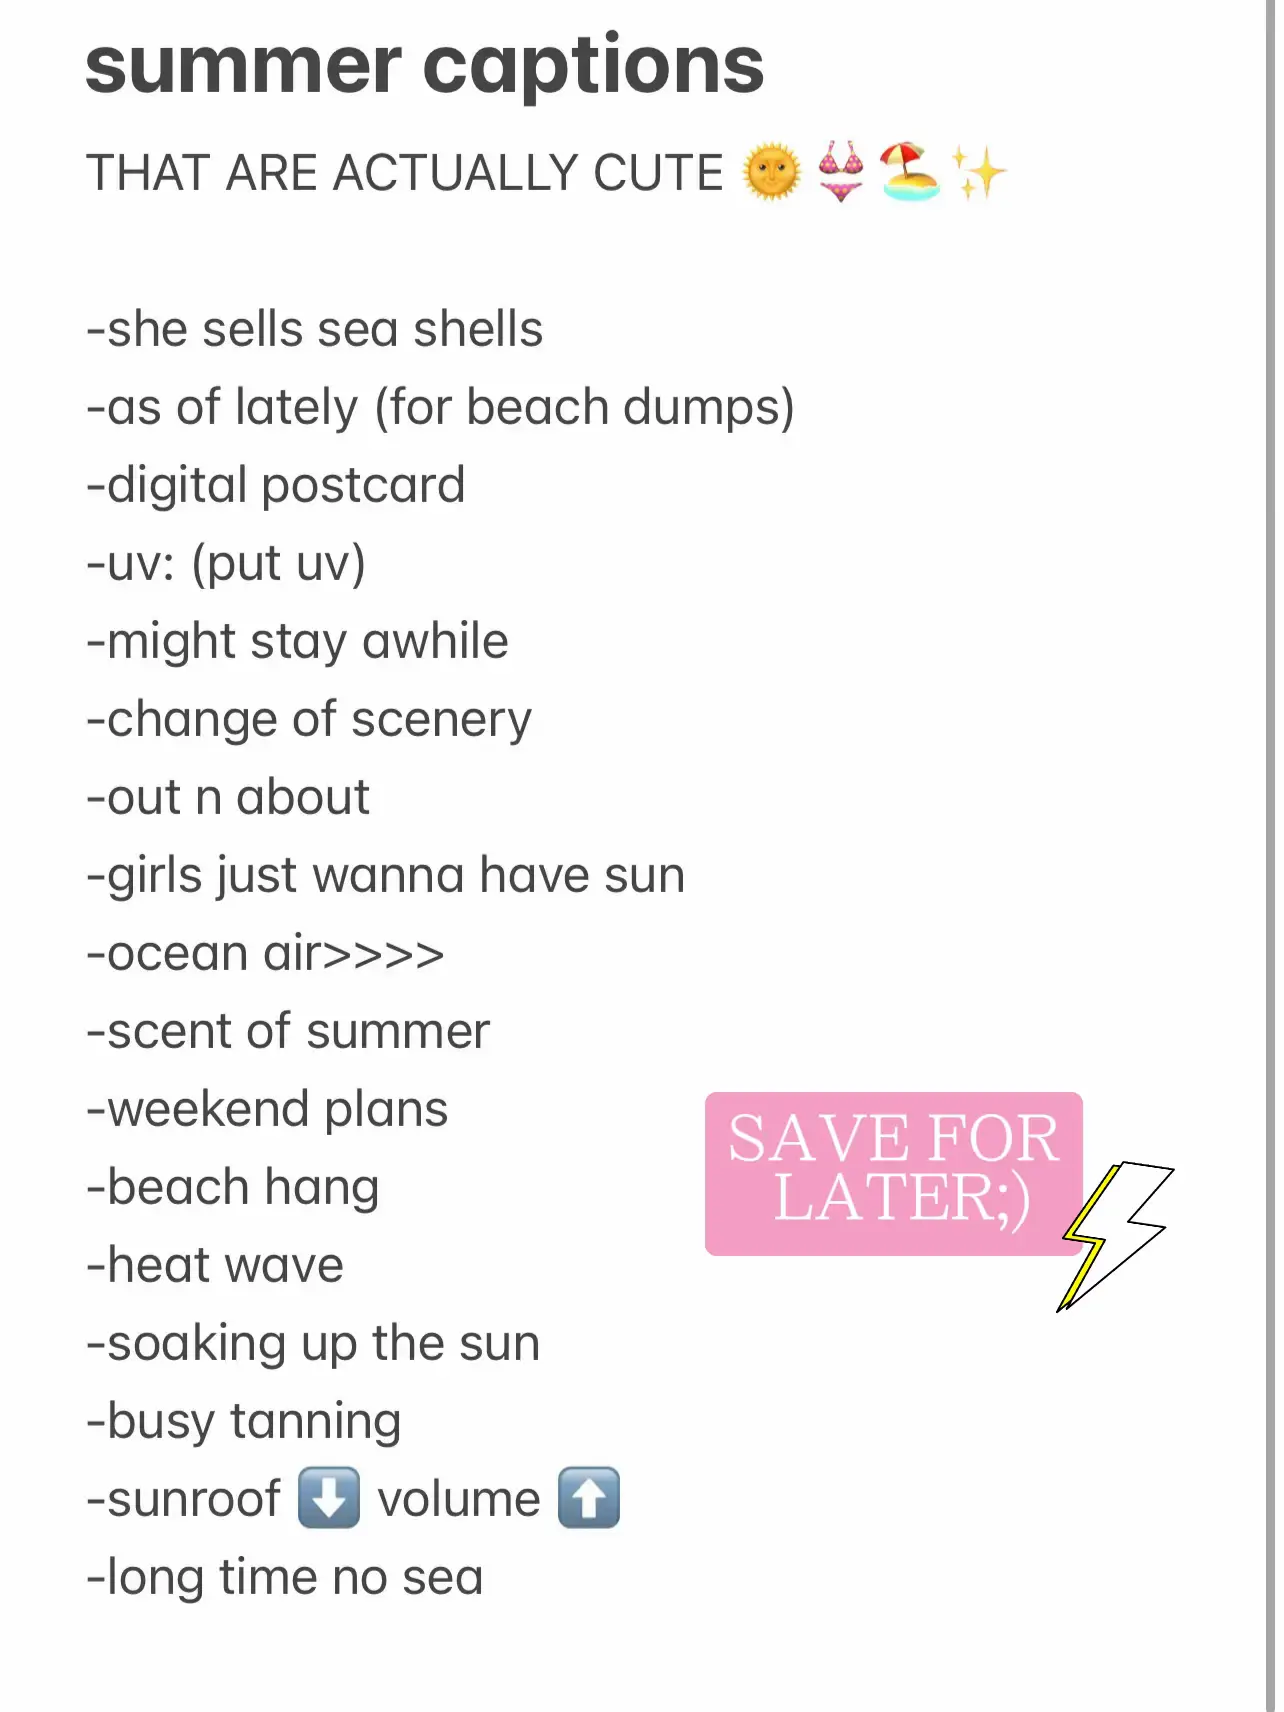  A list of summer captions